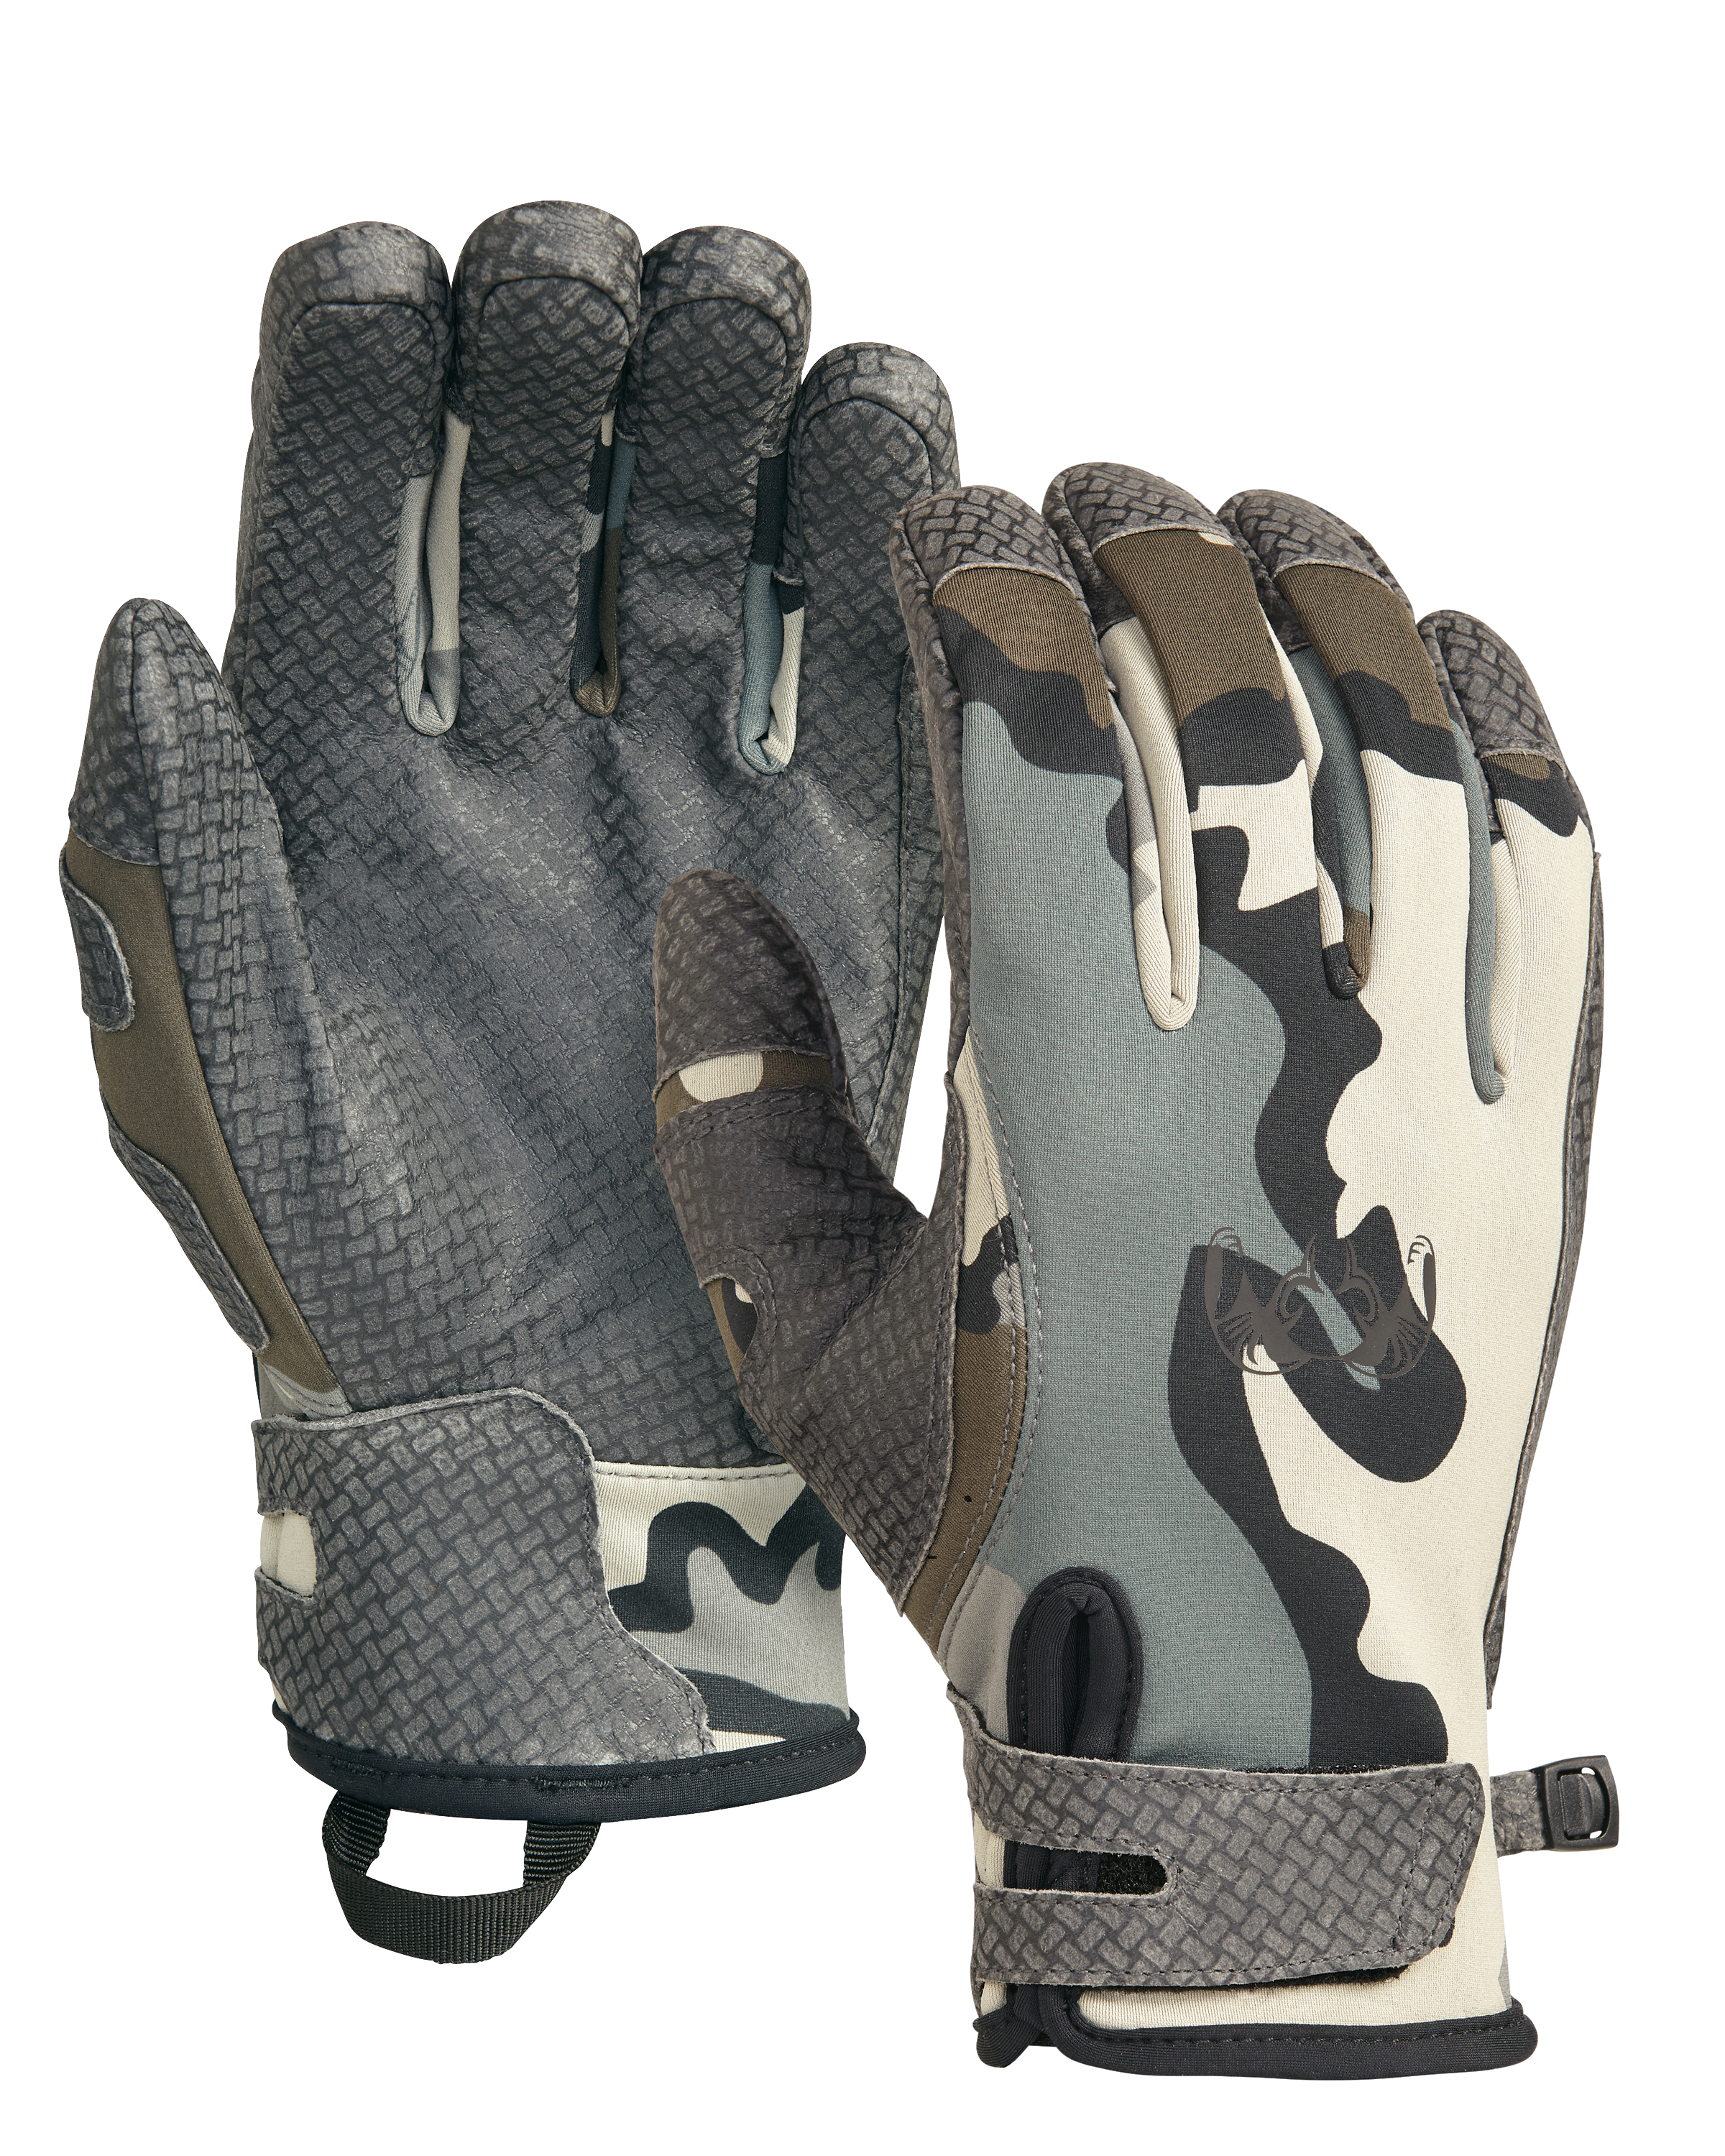 KUIU Guide X Hunting Glove in Vias | Large